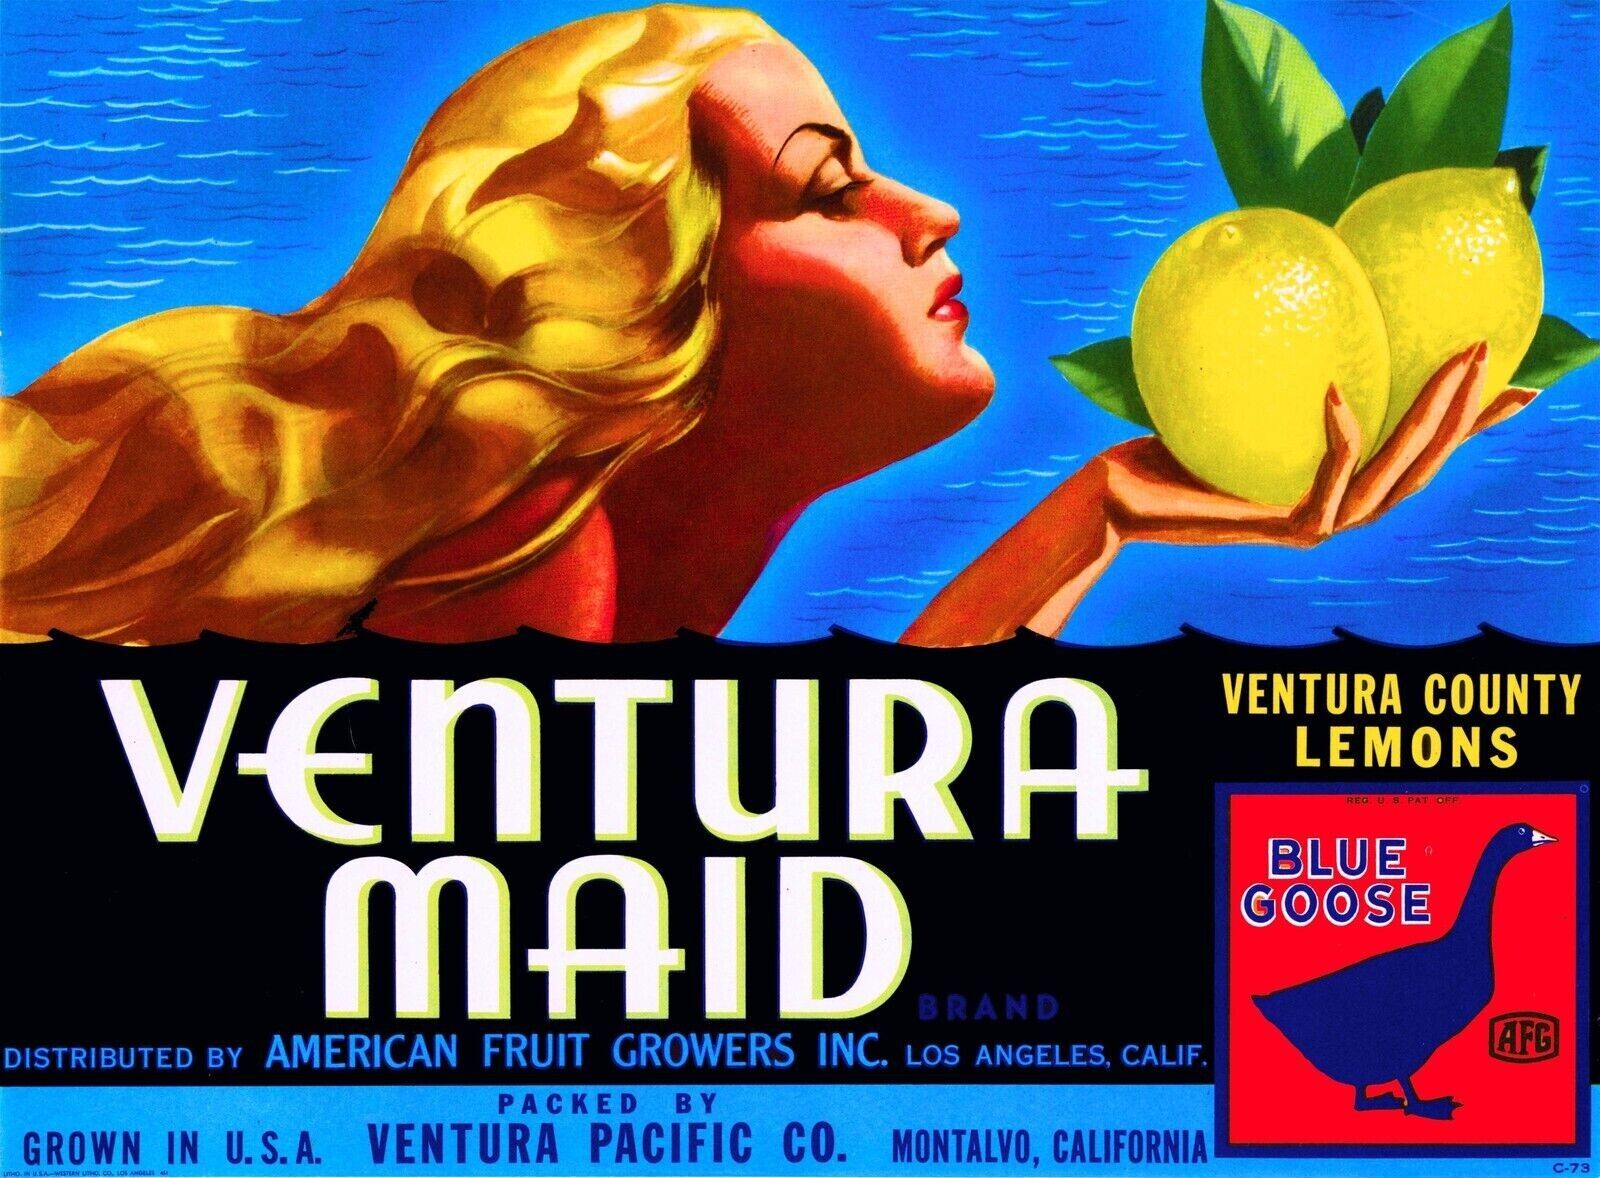 Ventura Maid Brand Lemon Montalvo Santa Barbara Citrus Fruit Crate Label 11x17